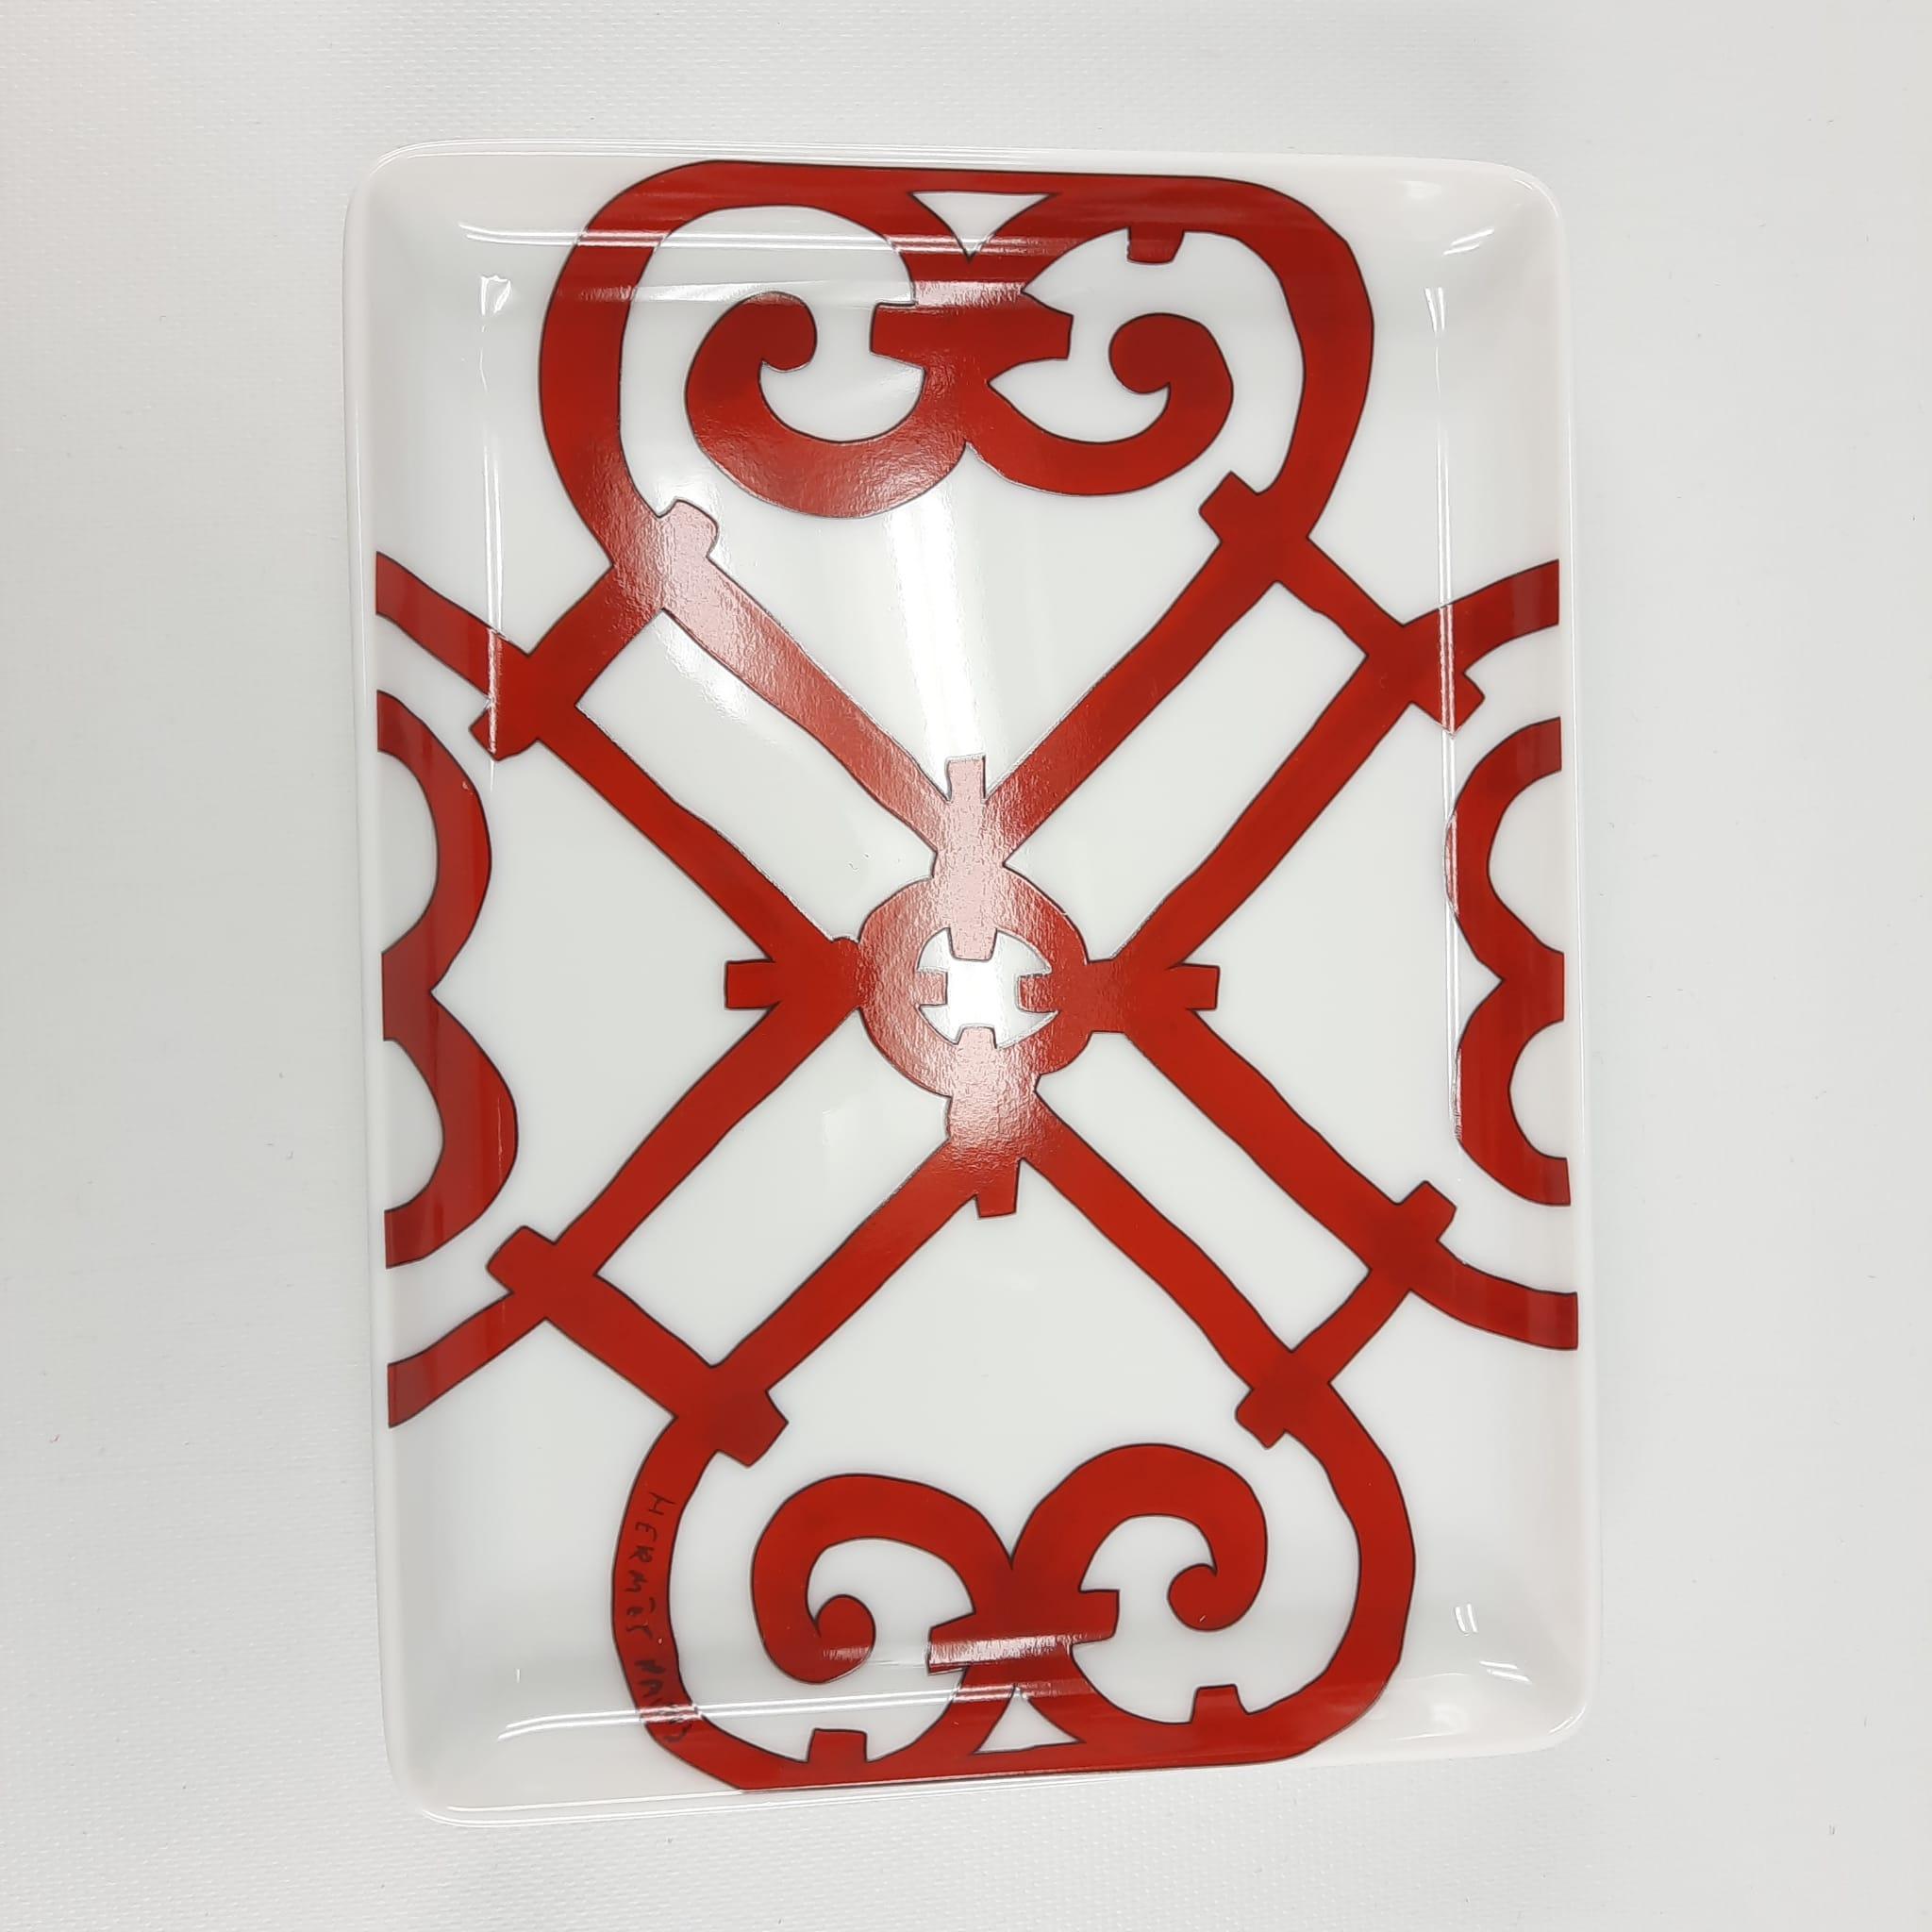 Tray in porcelain
Dimensions: L 16 x W 12 cm